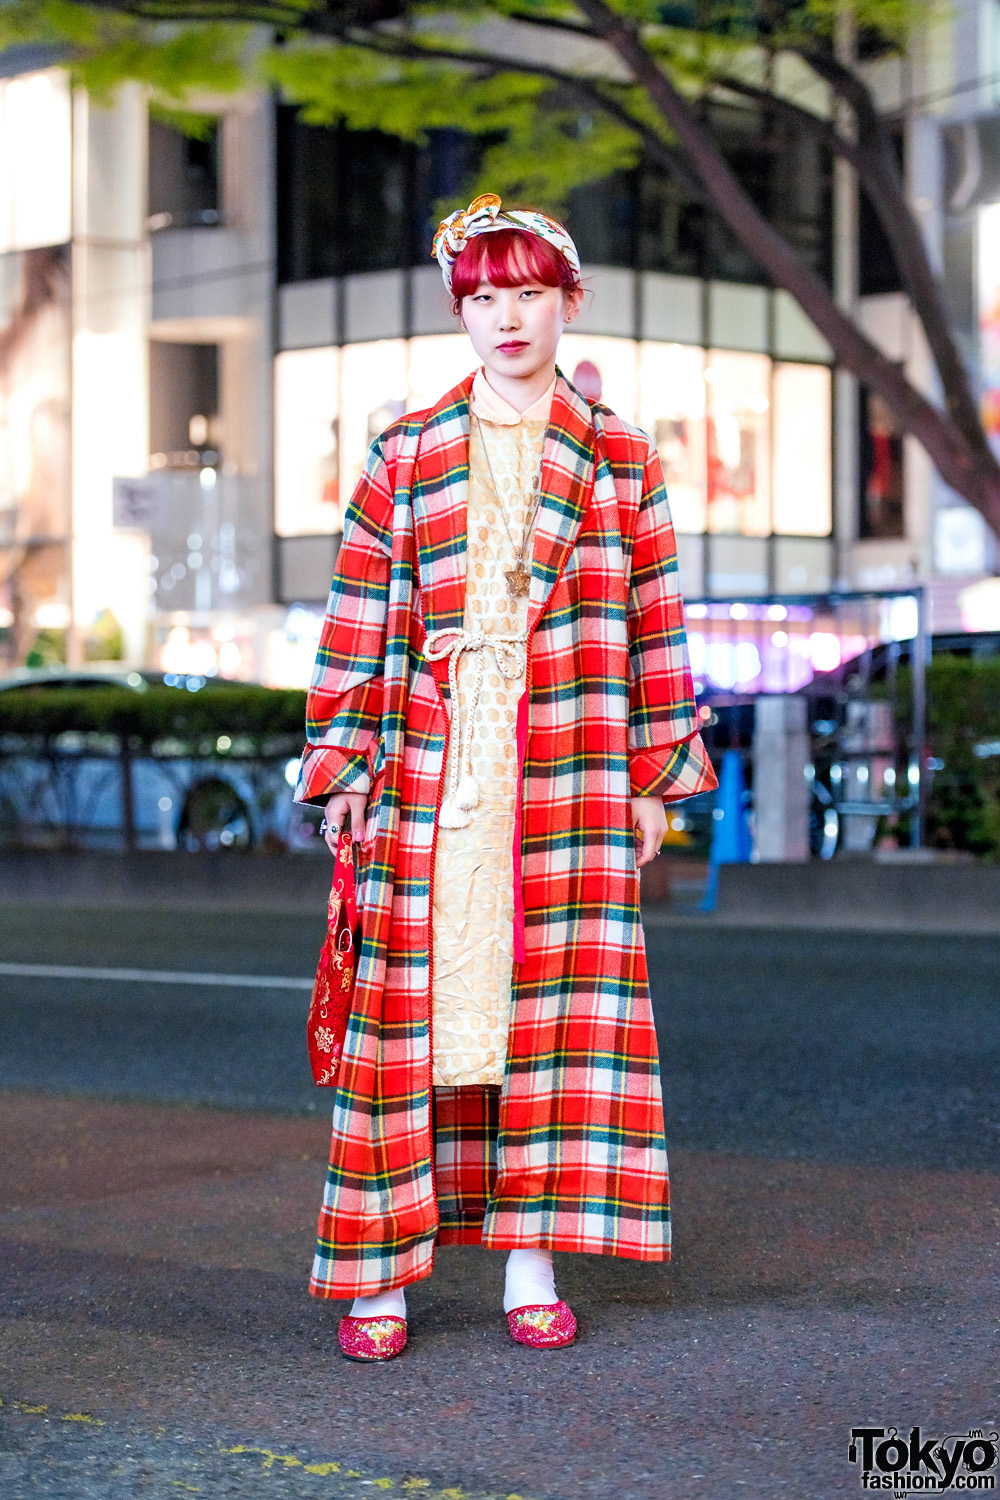 Retro Vintage Harajuku Fashion w/ Long Plaid Coat, Paisley Dress, Sequin Shoes, Floral Tote & Rope Belt